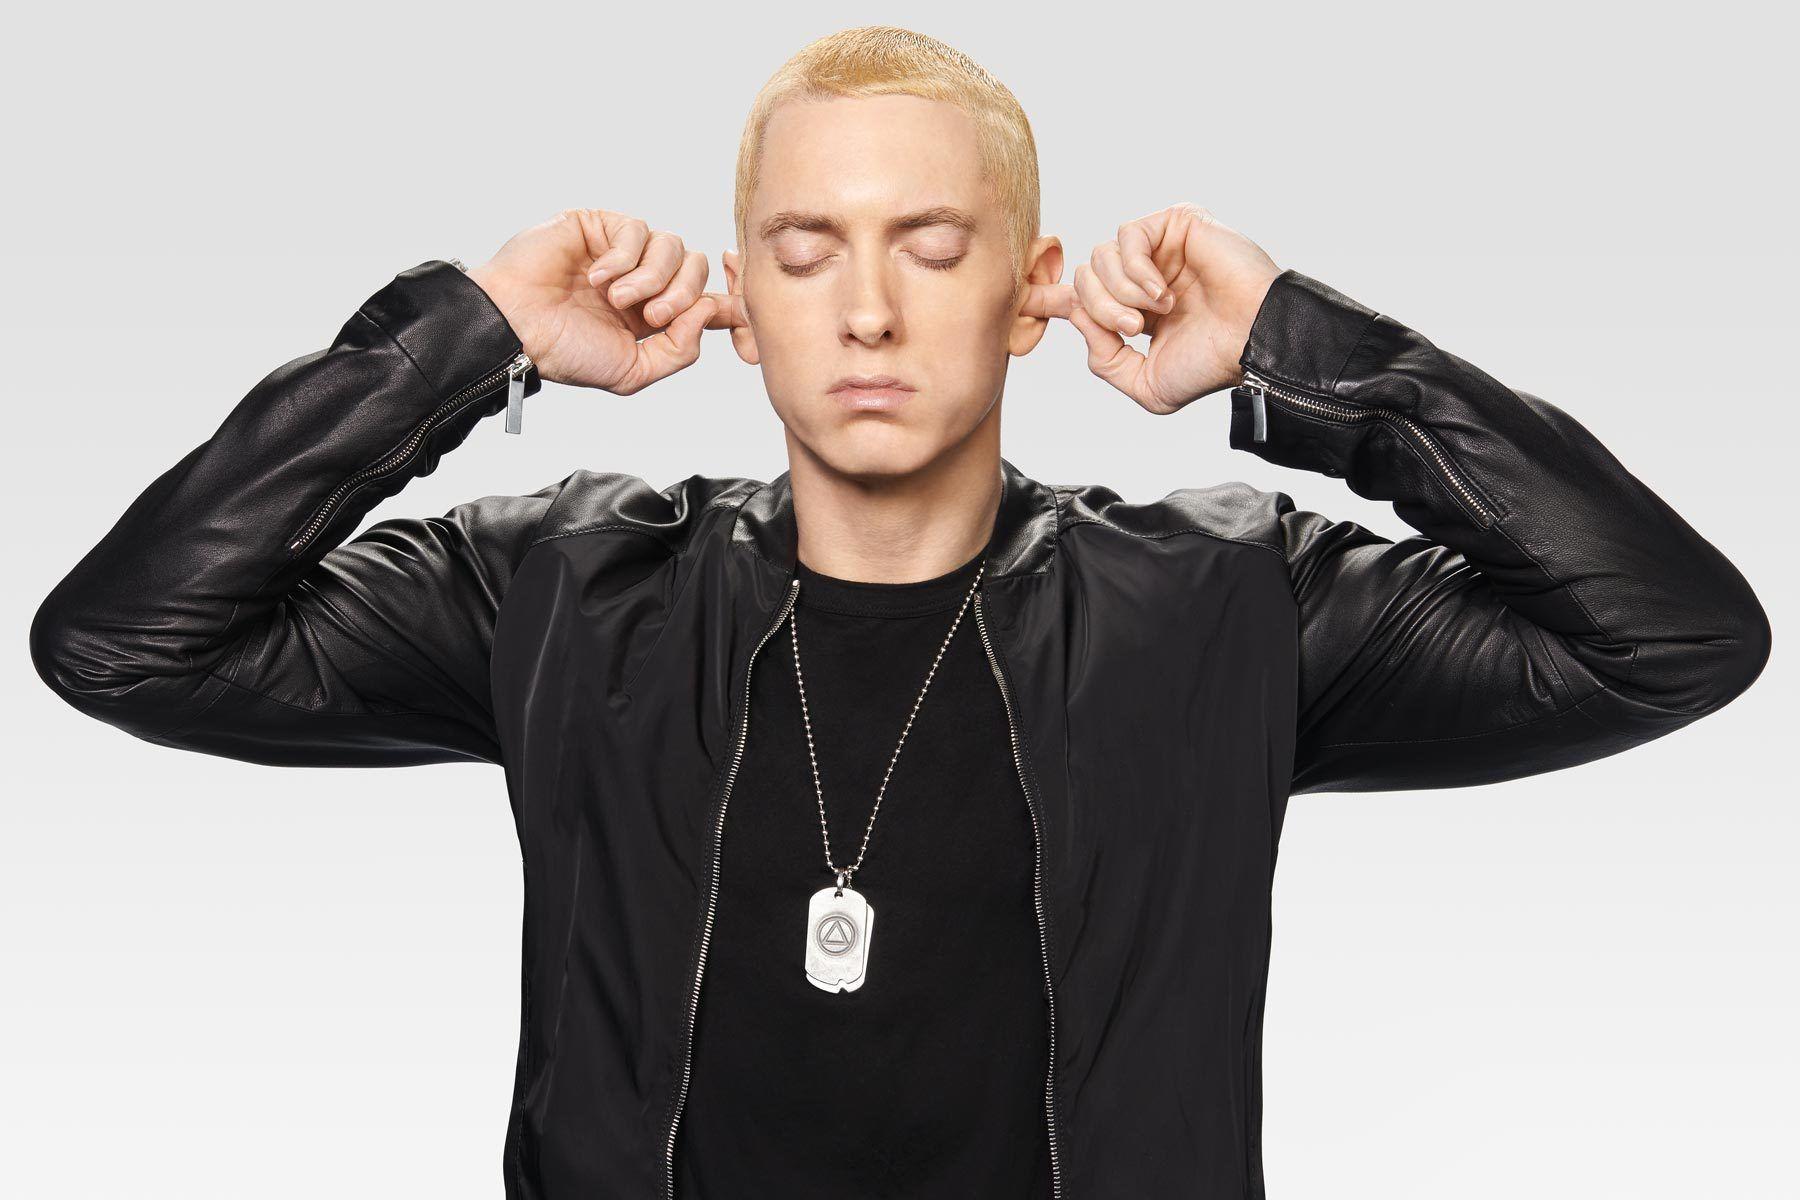 Quality Eminem Wallpaper, Celebrity